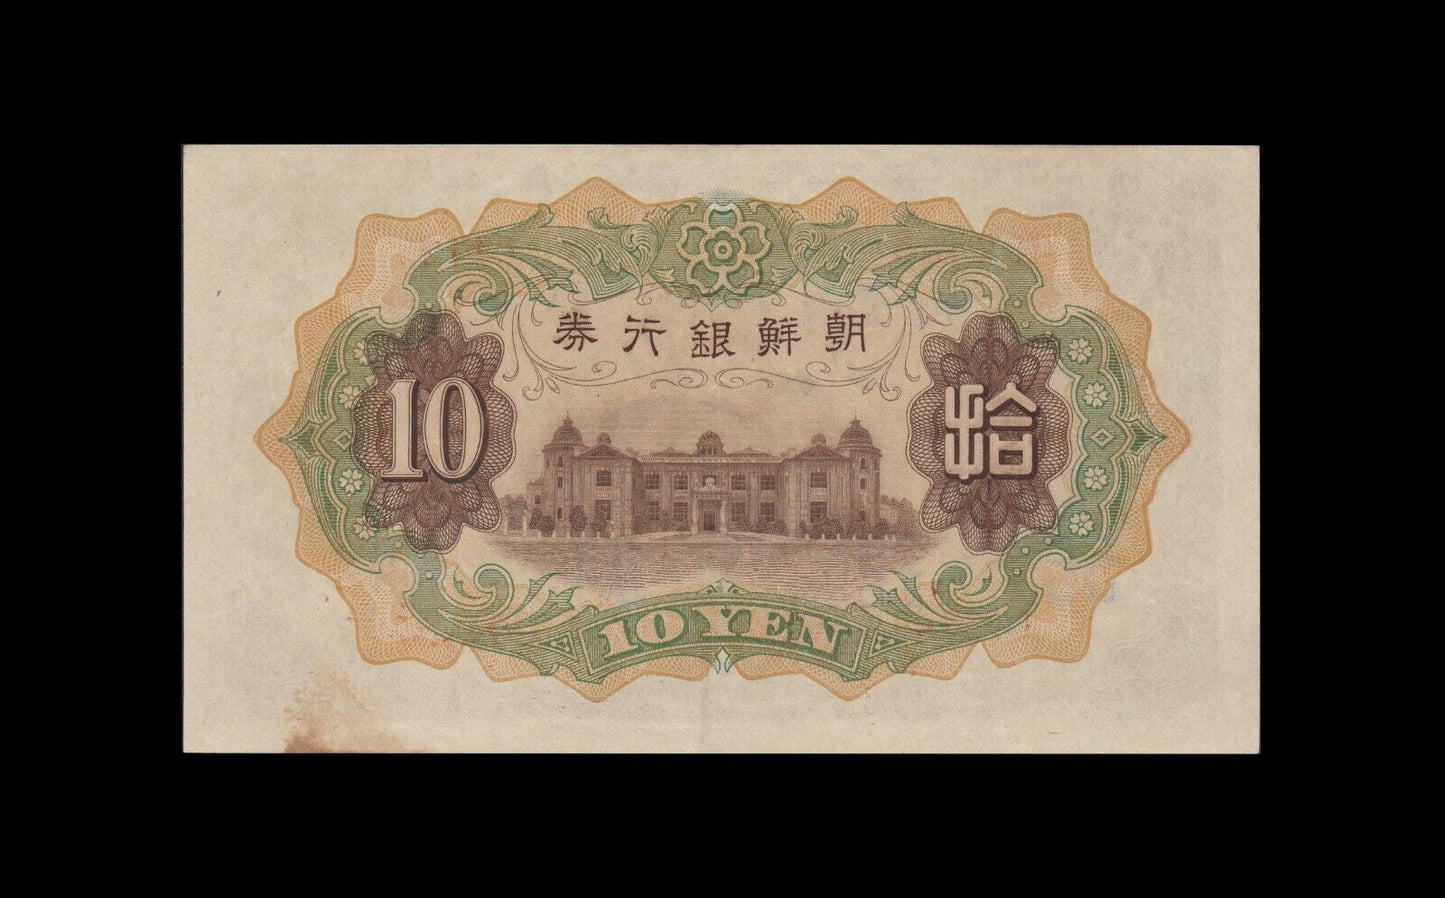 CORÉE - KOREA, Bank of Chosen - 10 Yen (1932) P.31a pr.NEUF / UNC-